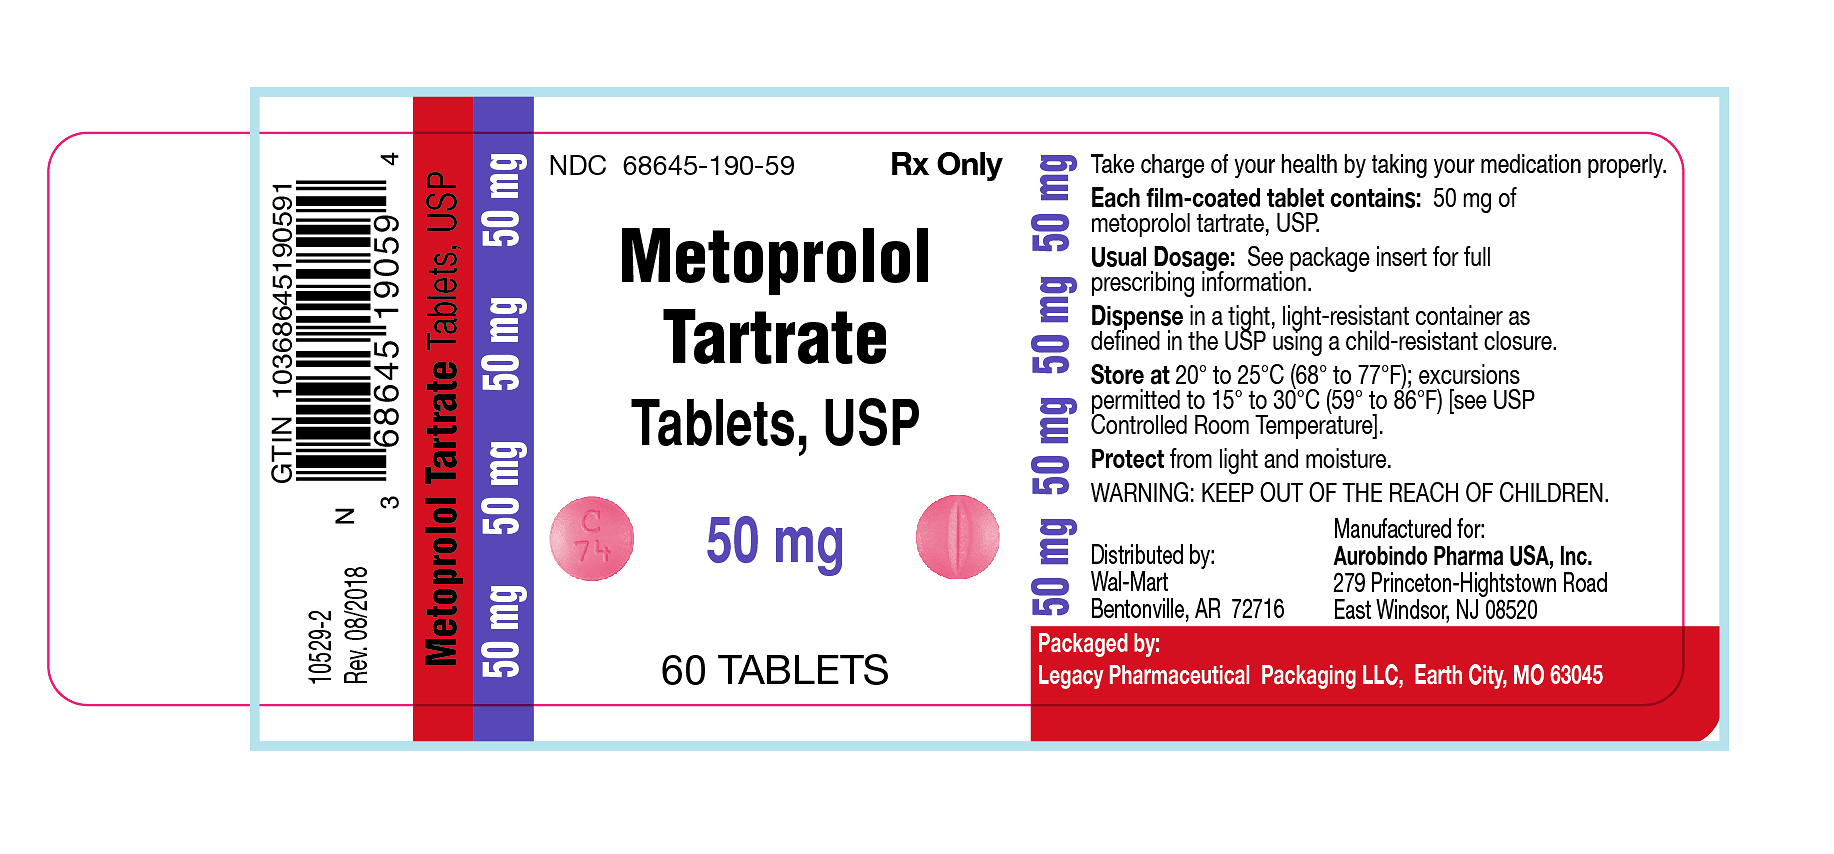 Metoprolol Tartrate Tablets, USP 50 mg